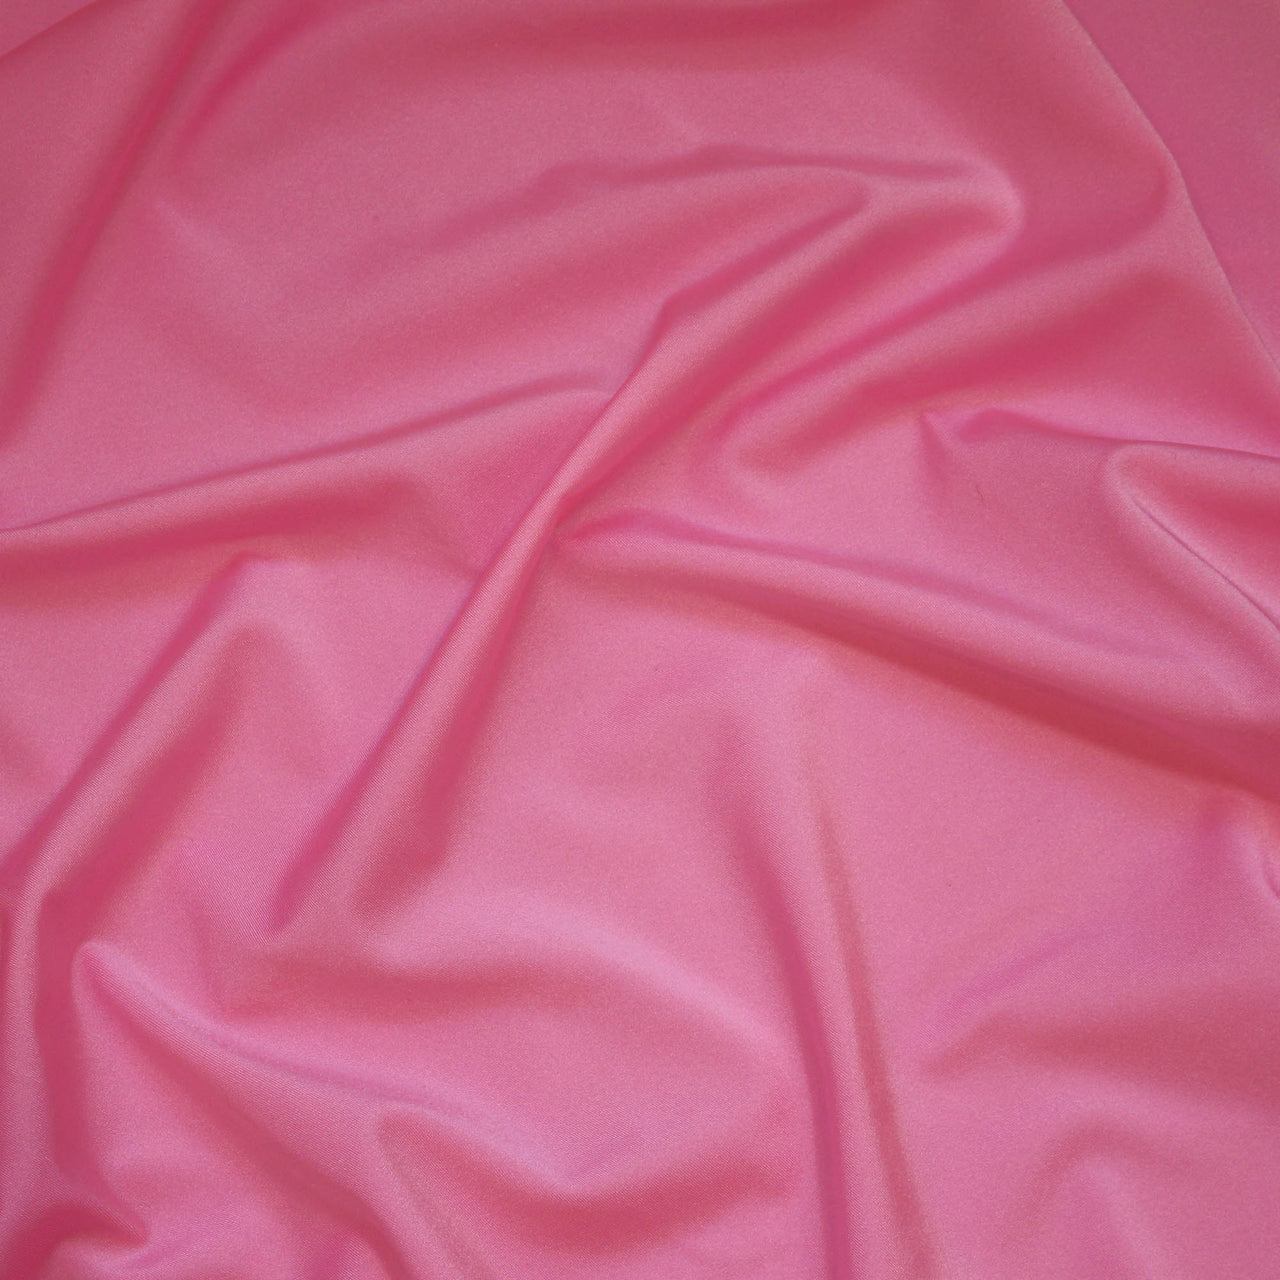 Candy Pink - Nylon Spandex Fabric - 4 Way All Way Stretch Superior Quality - Leotards, Dancewear